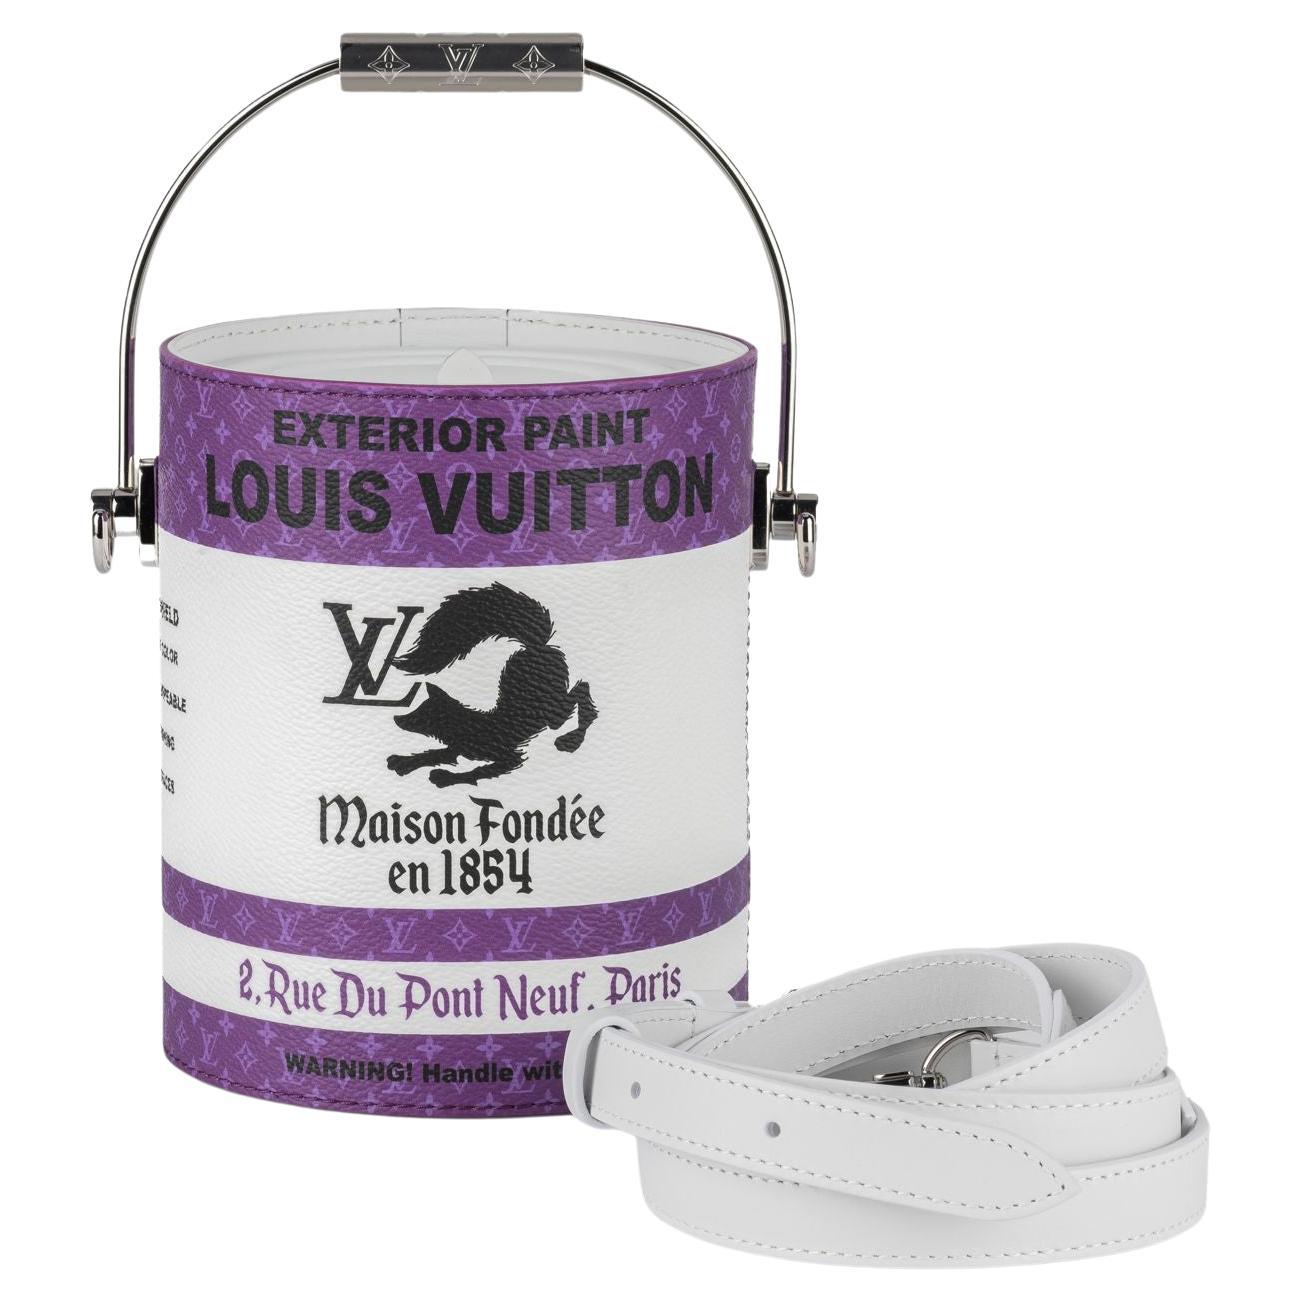 Louis Vuitton Paint Can Purse - 8 For Sale on 1stDibs  lv paint can bag, louis  vuitton paint can bag, louis vuitton paint can bag price